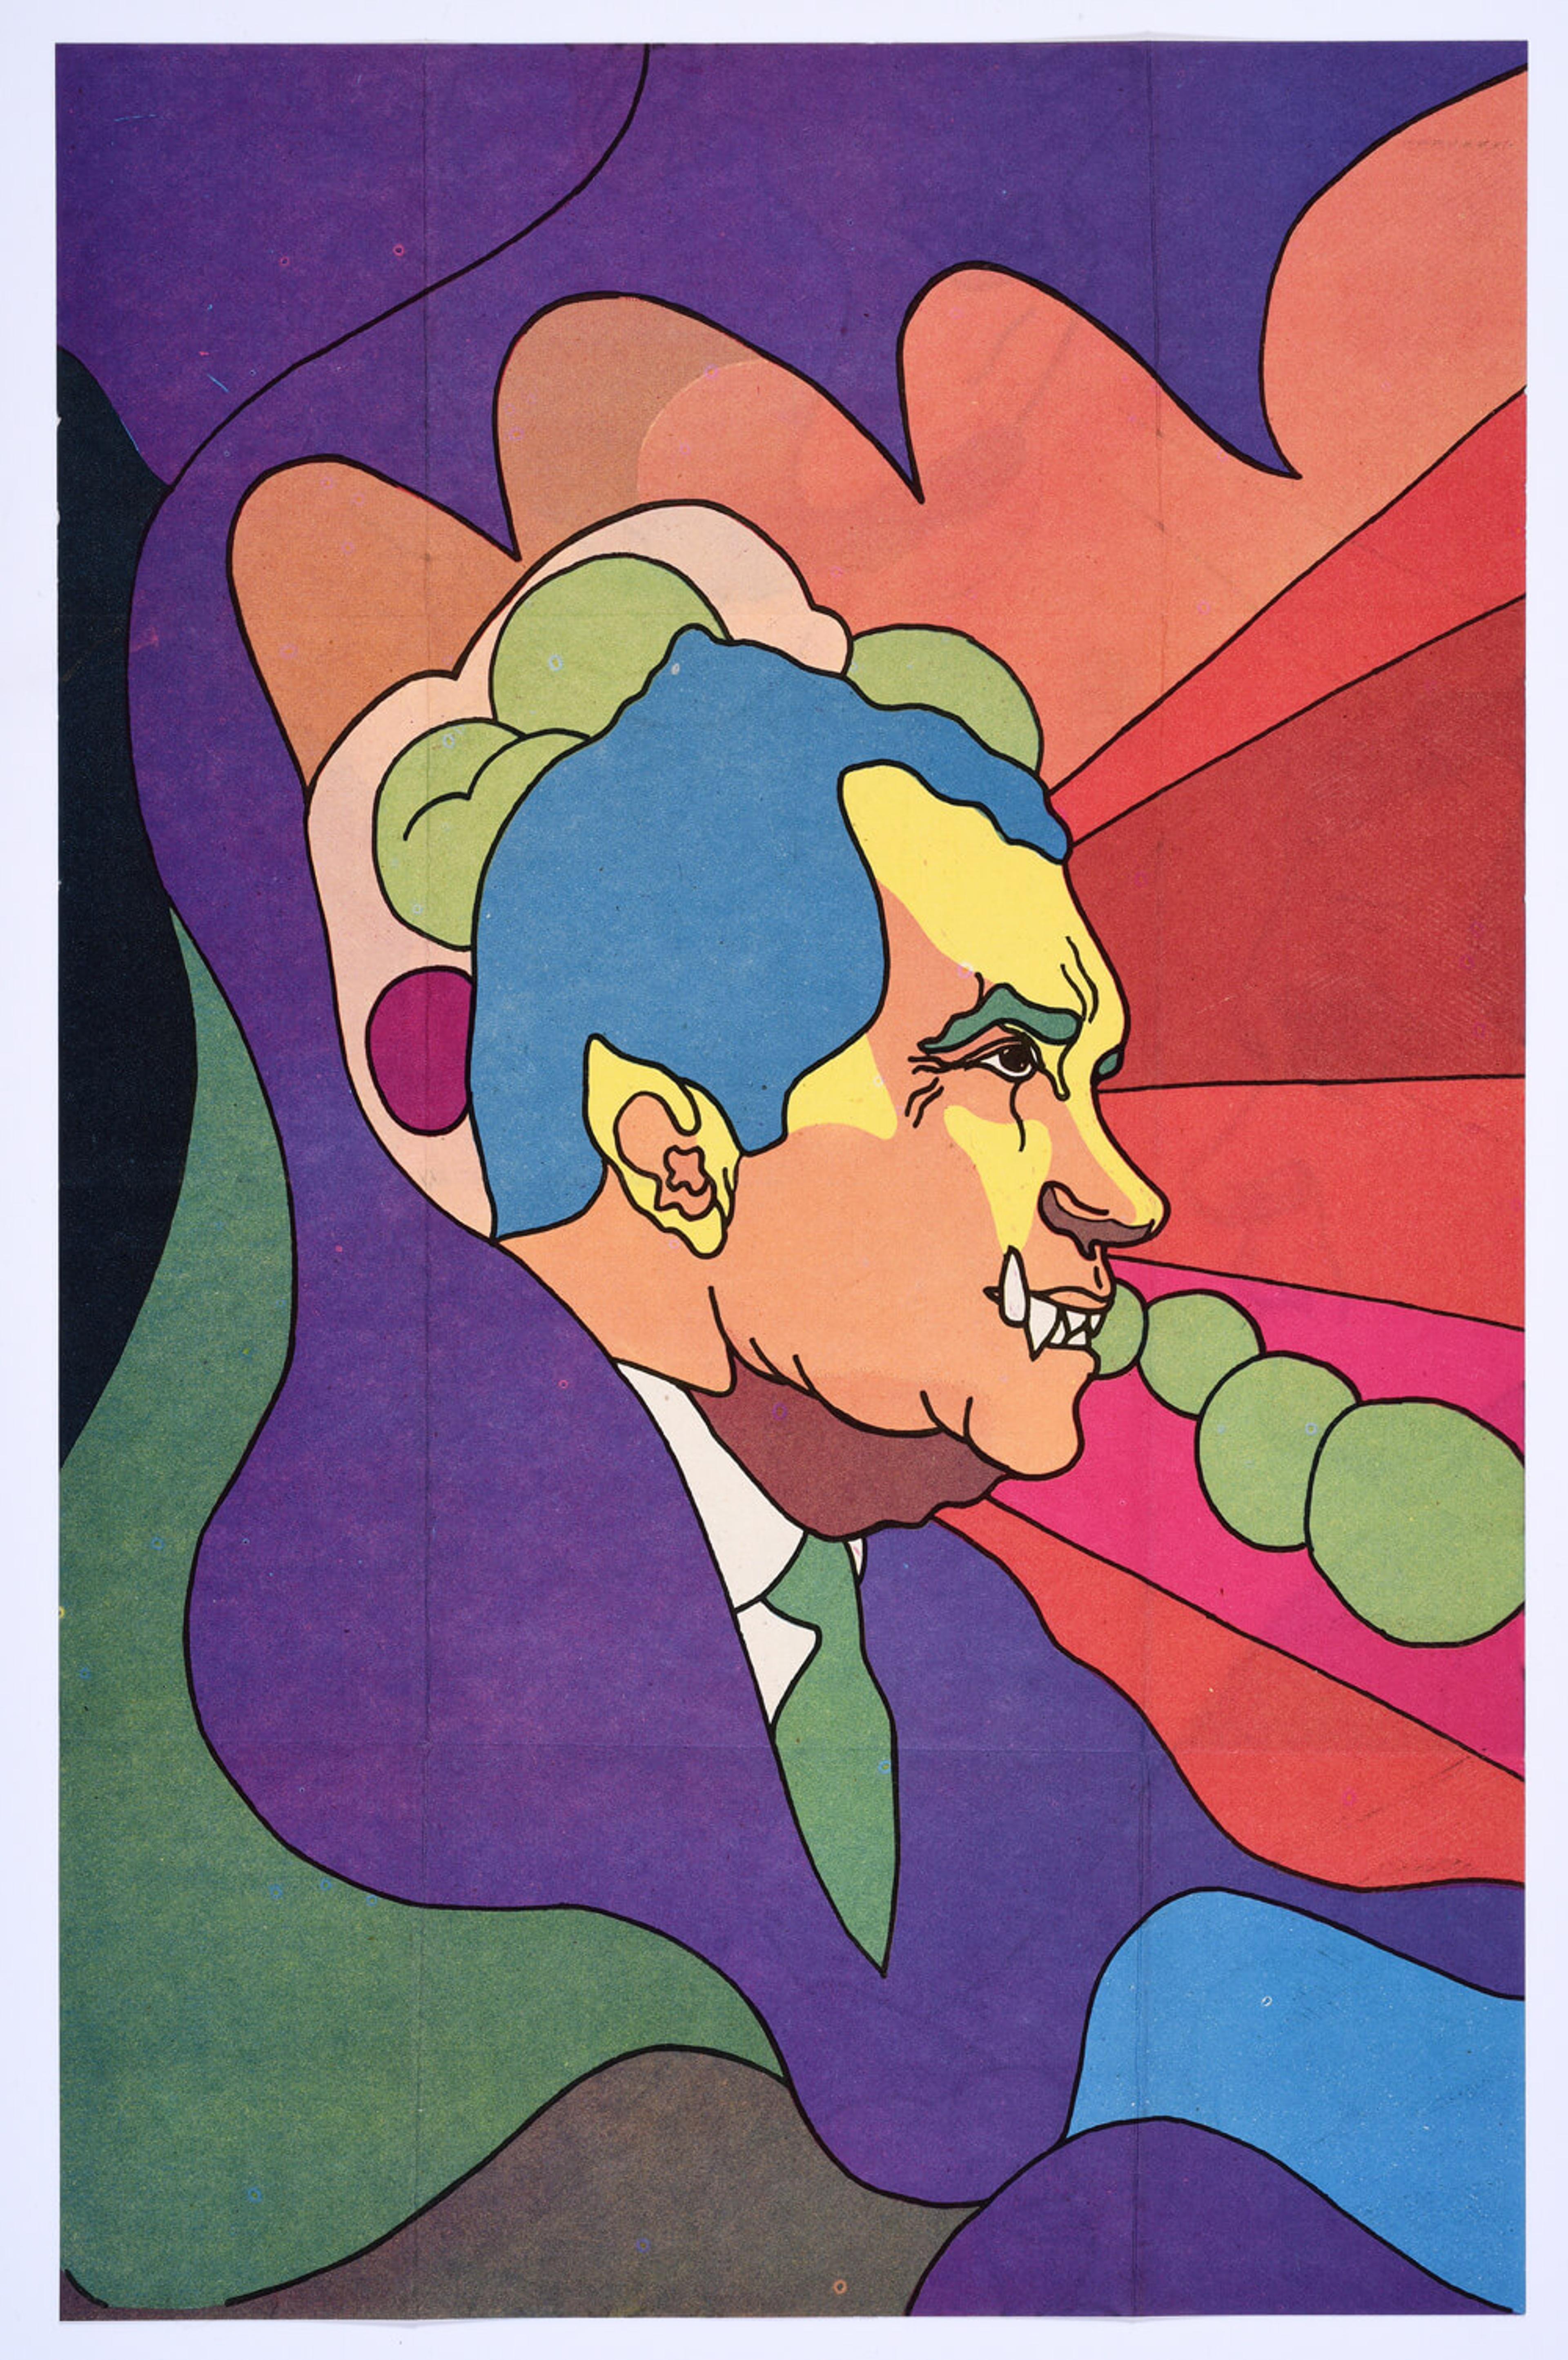 Colourful poster depicting Richard Nixon as a demon